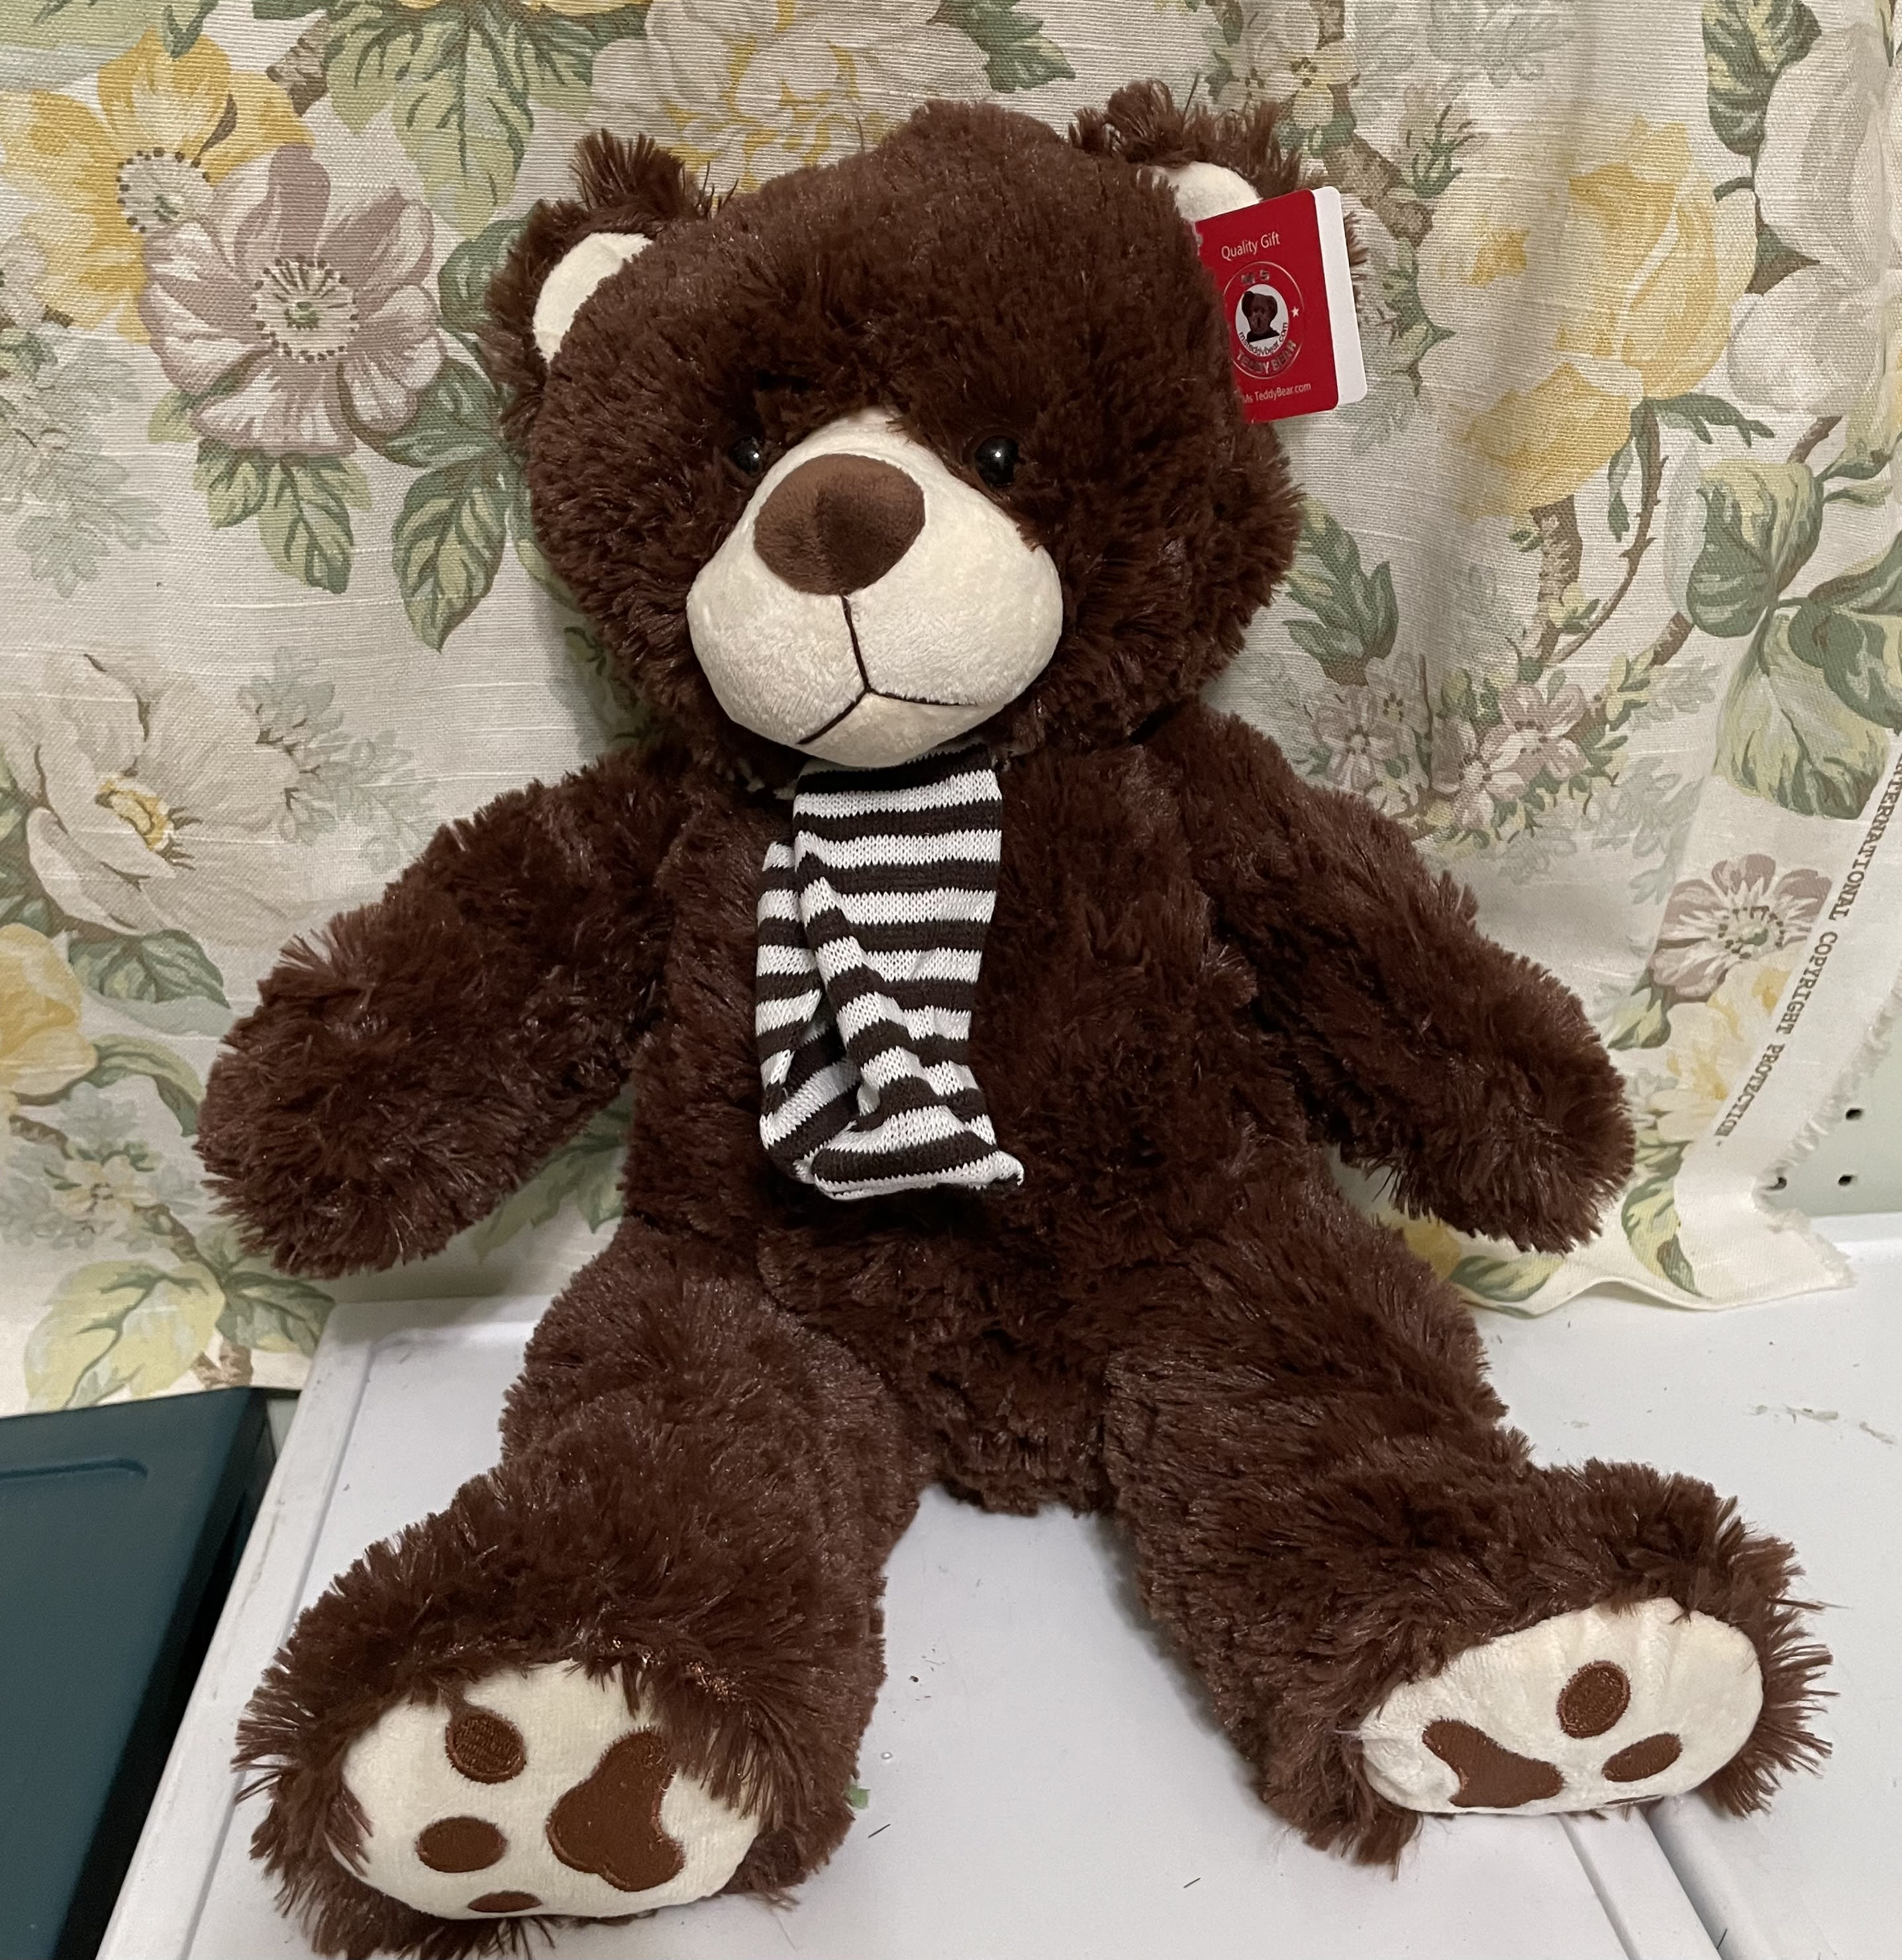 Medium Teddy Bear - Plush bear. Soft and cuddly. Medium size. Color will vary.